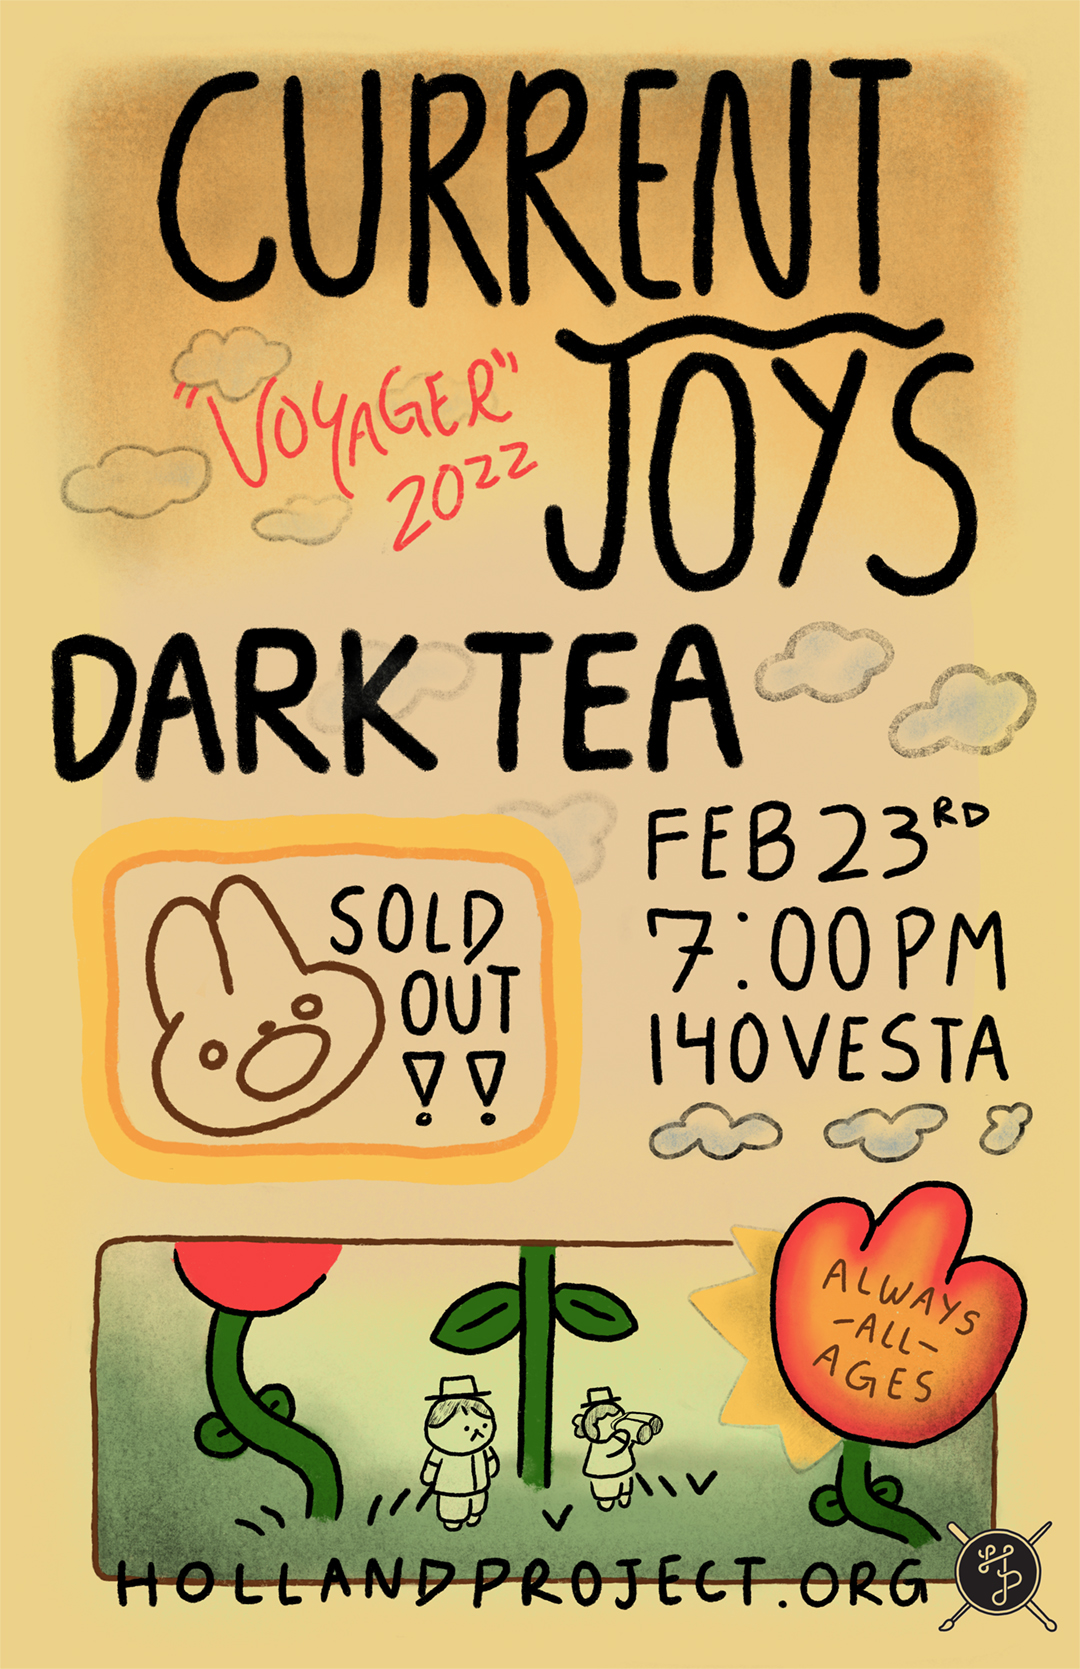 Current Joys Voyager Tour w/ Dark Tea